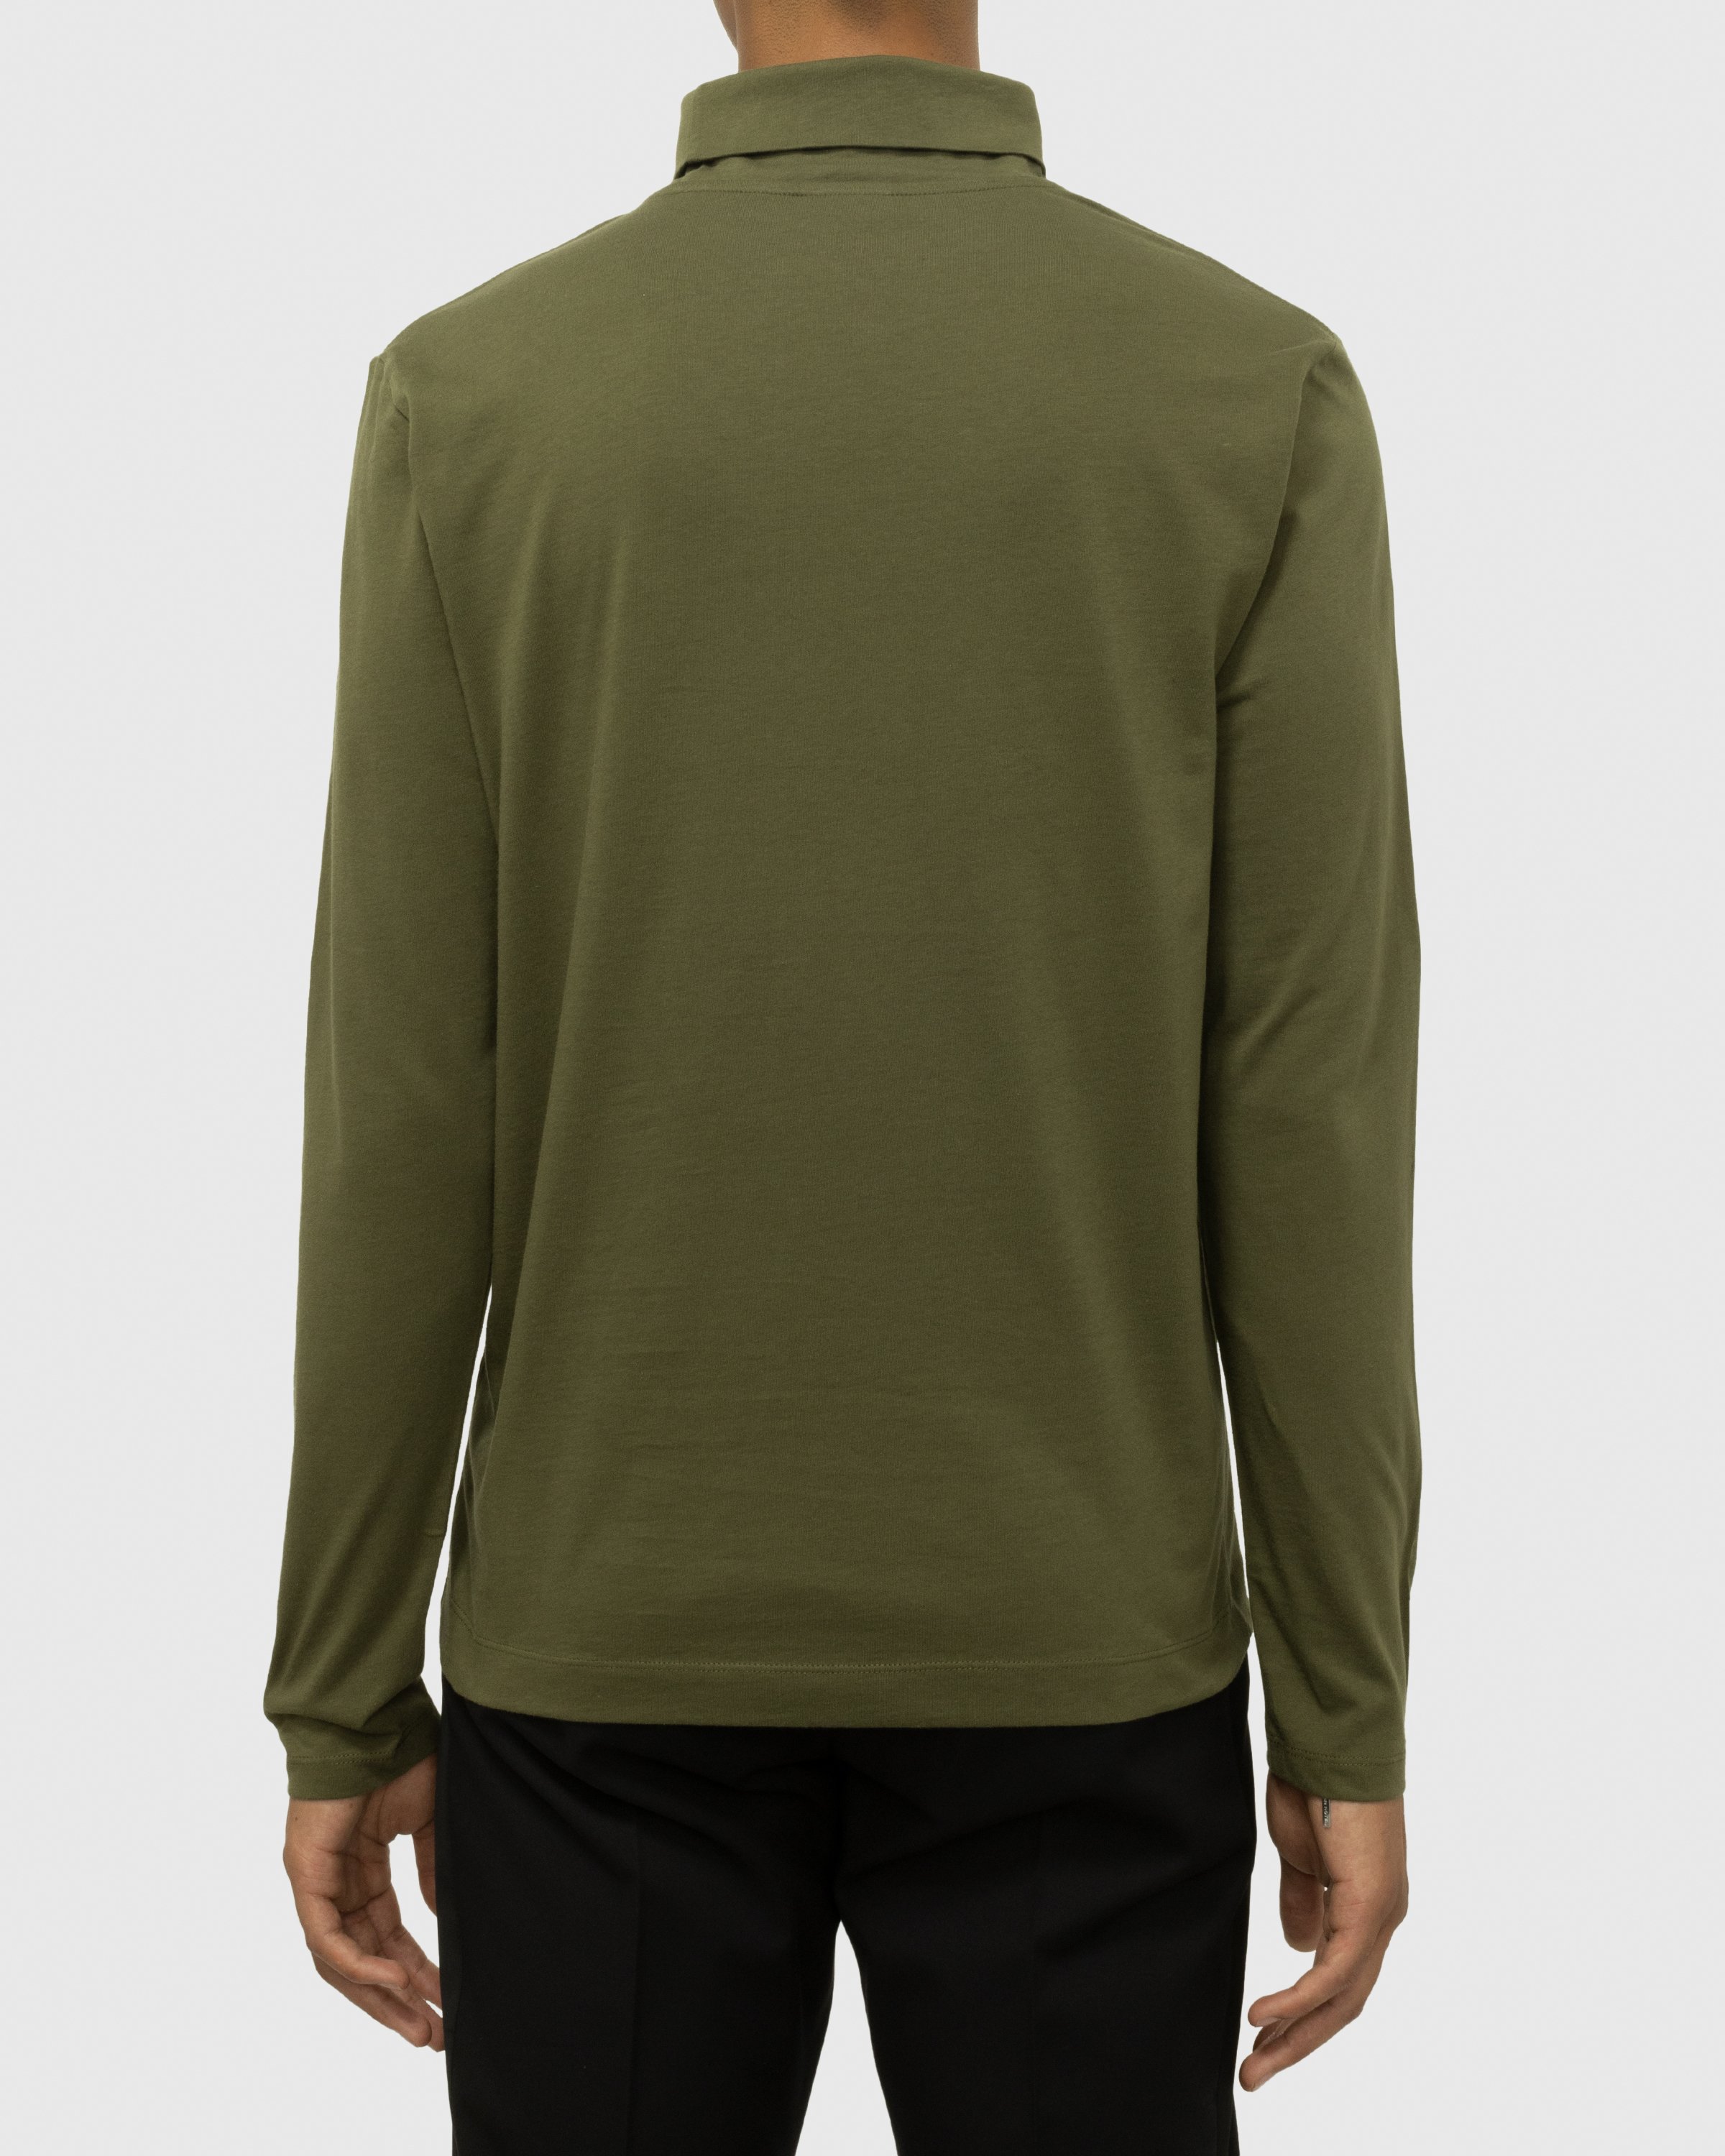 Dries van Noten - Heyzo Turtleneck Jersey Shirt Green - Clothing - Green - Image 2